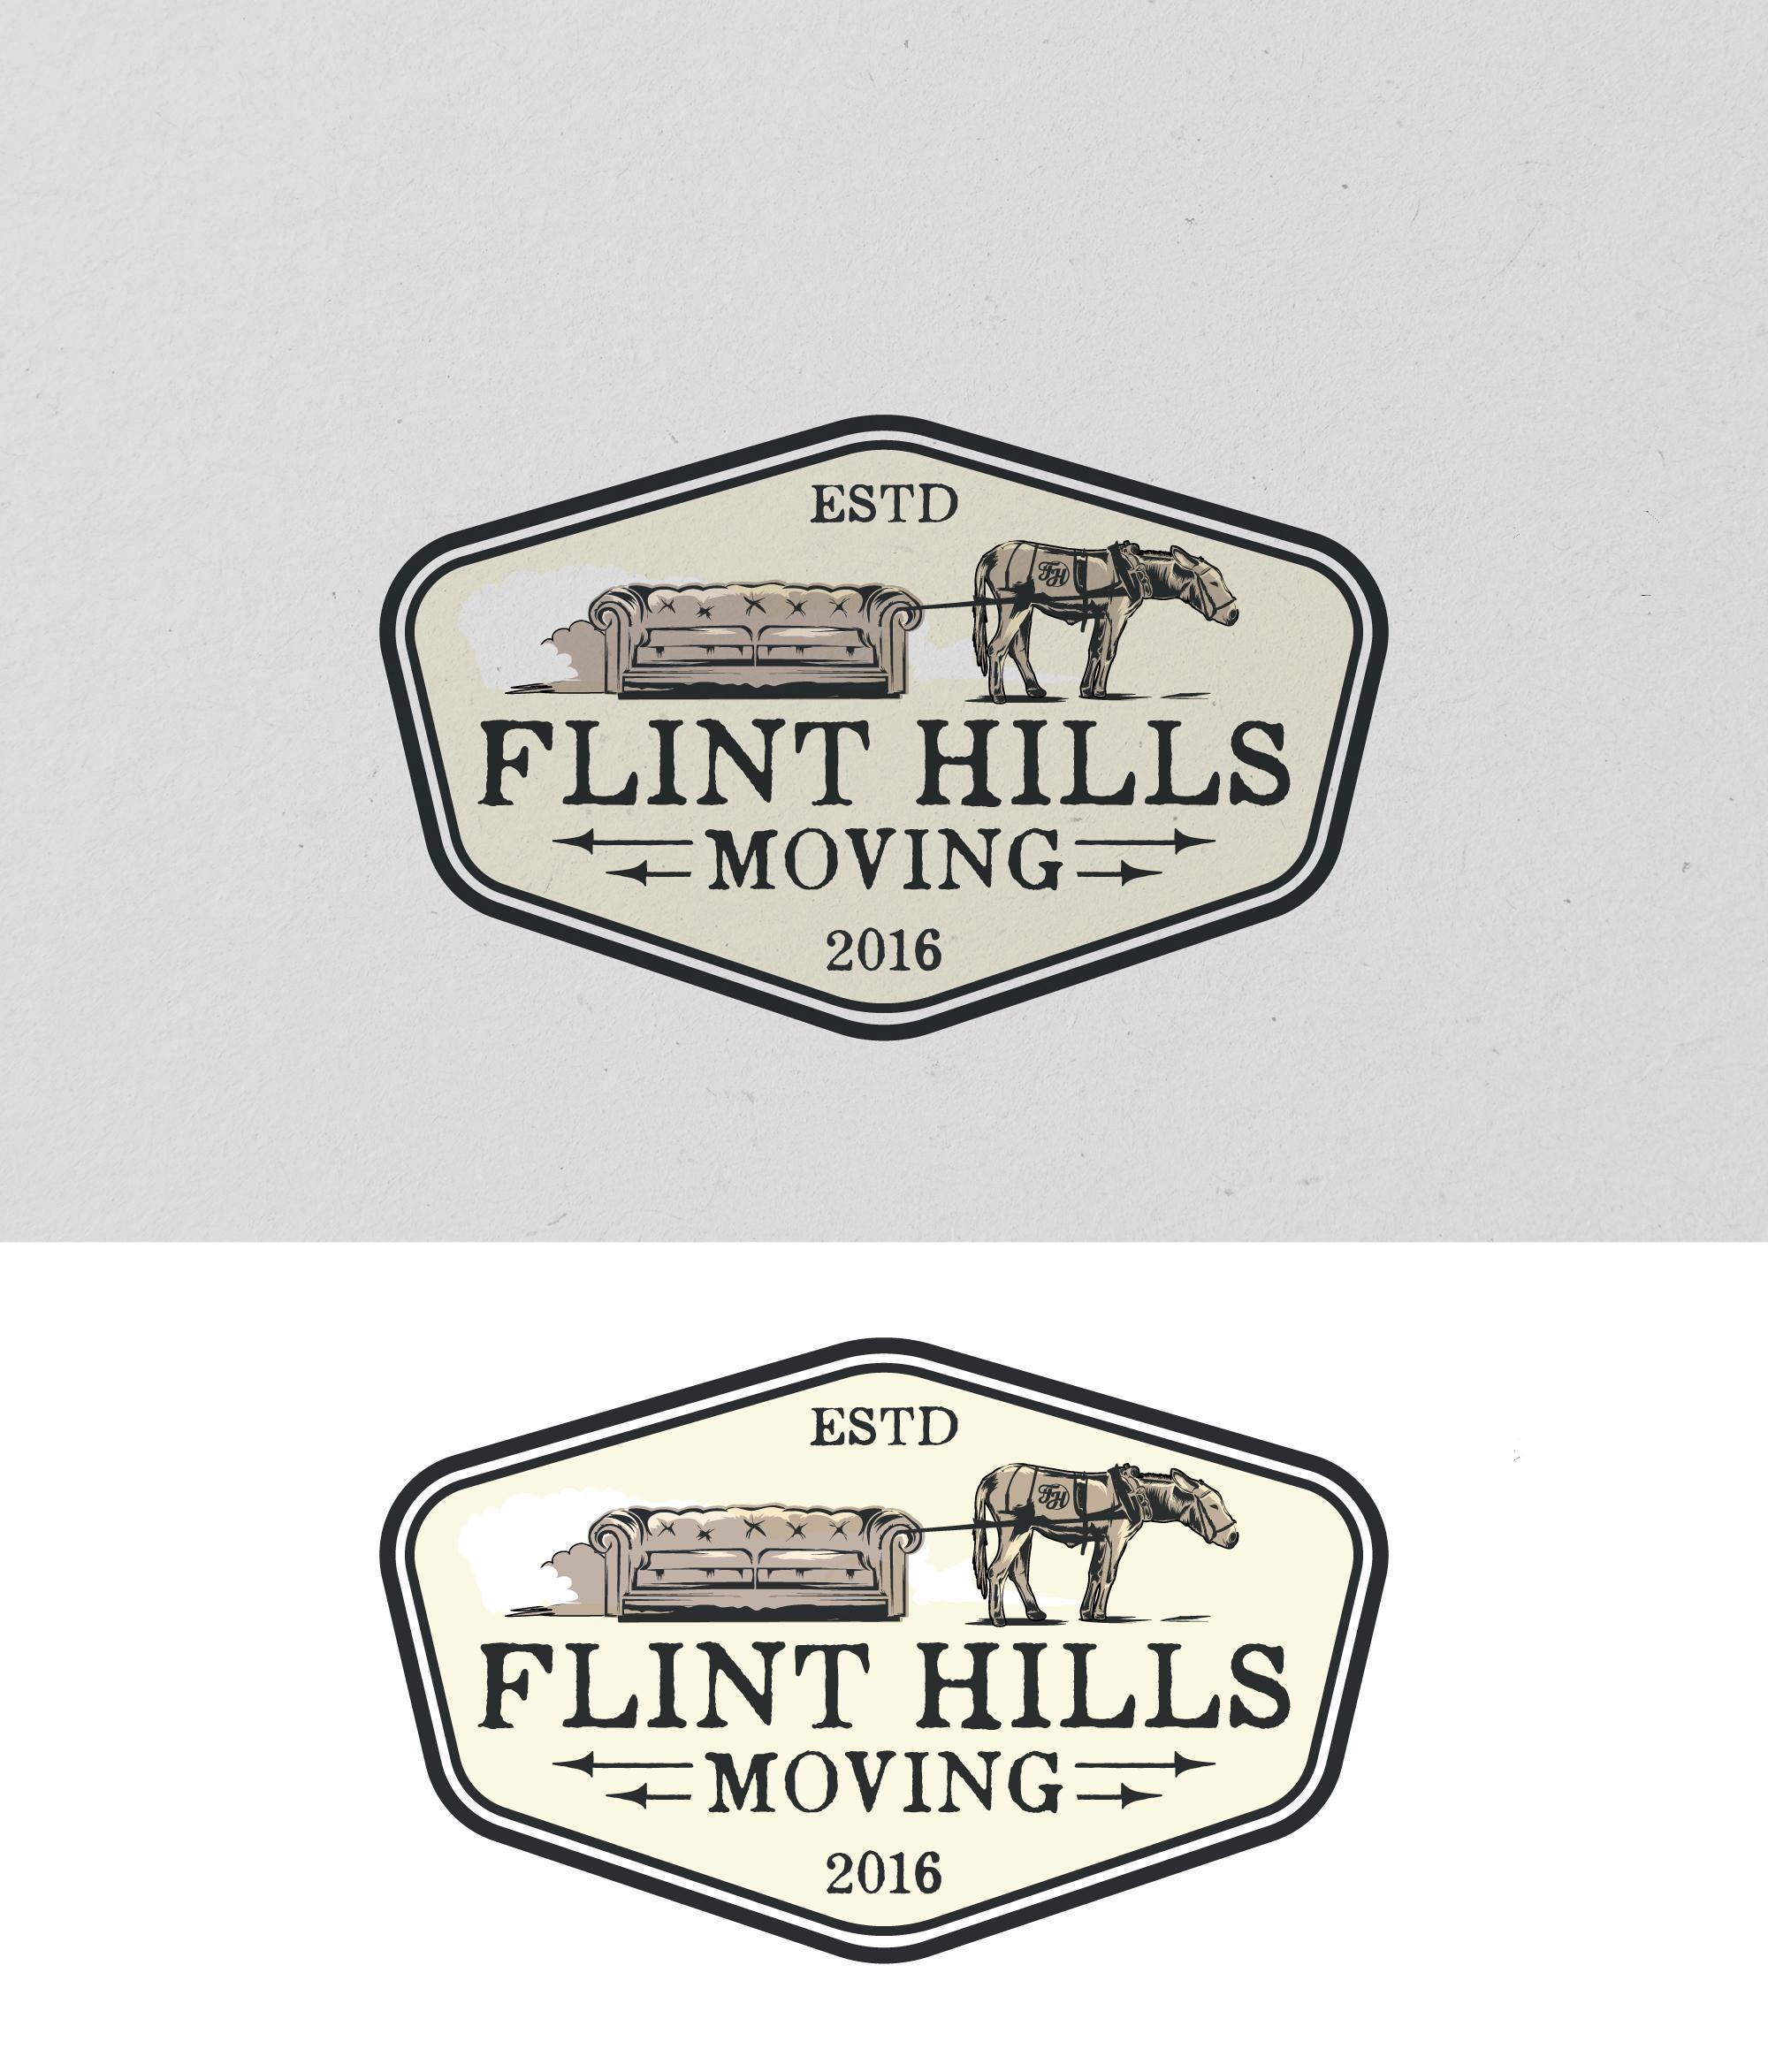 Flint Hills Moving logo 1